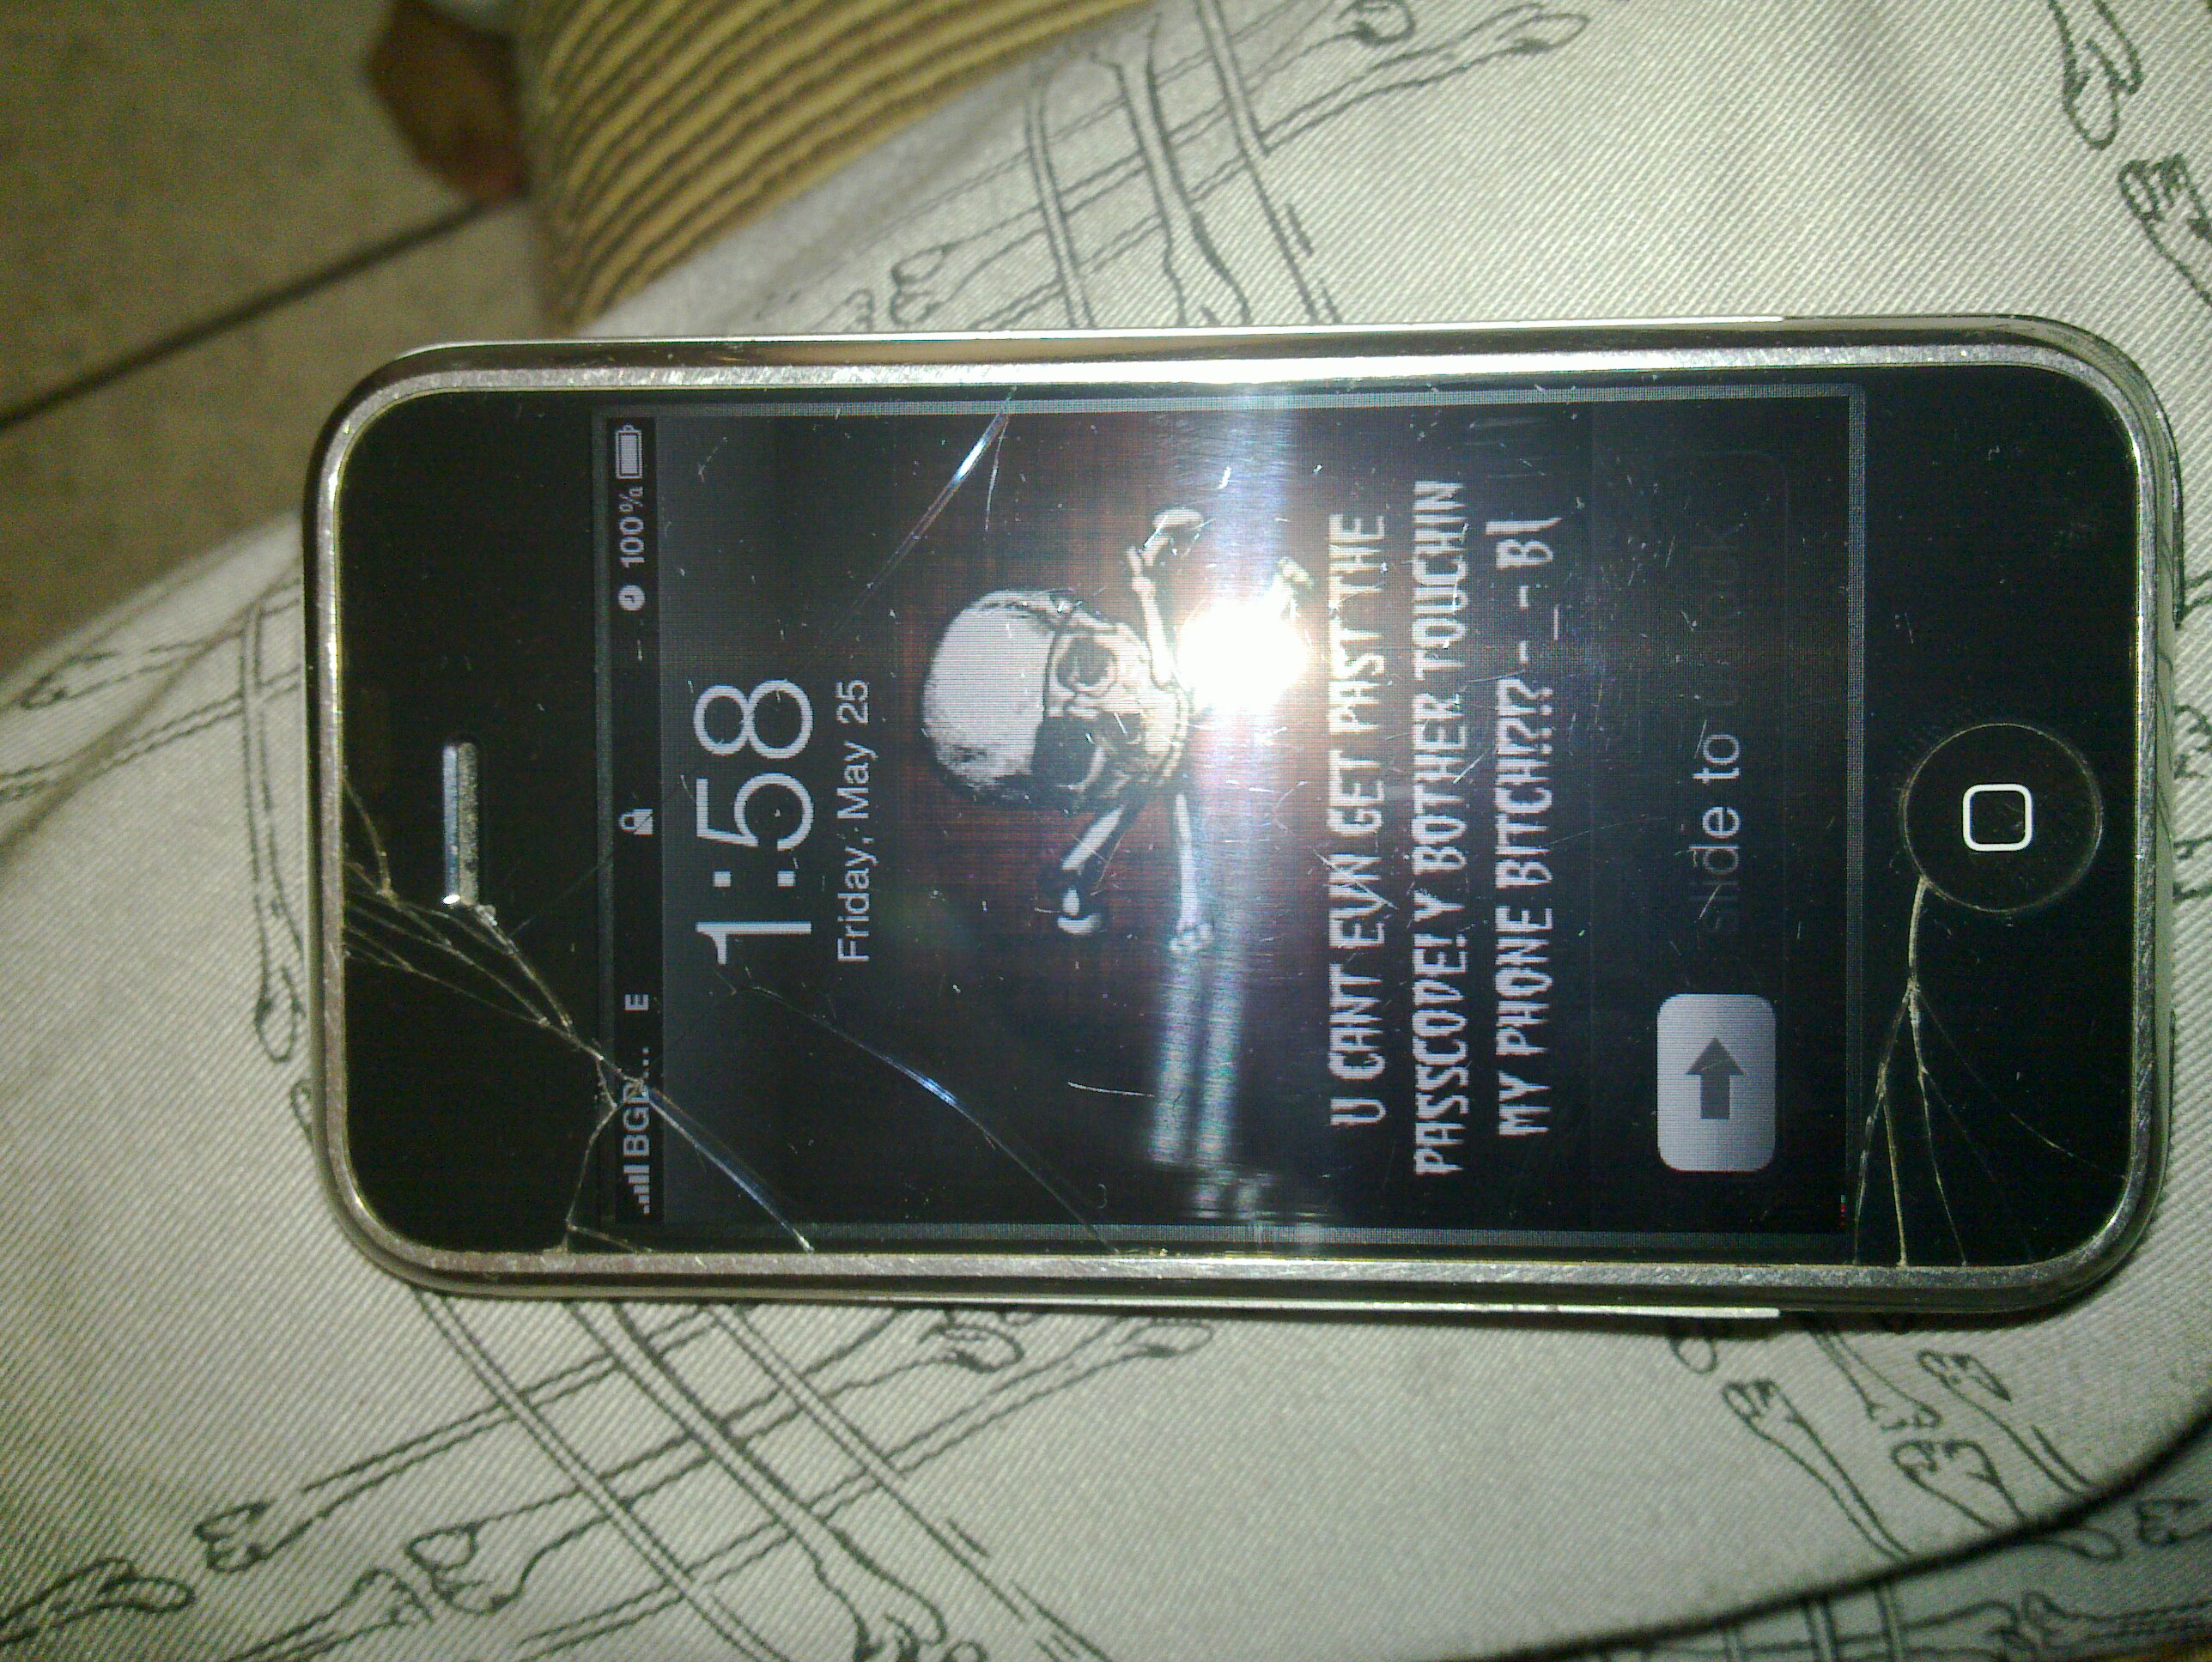 Iphone 2g 16gb for sale. Details inside. large image 1